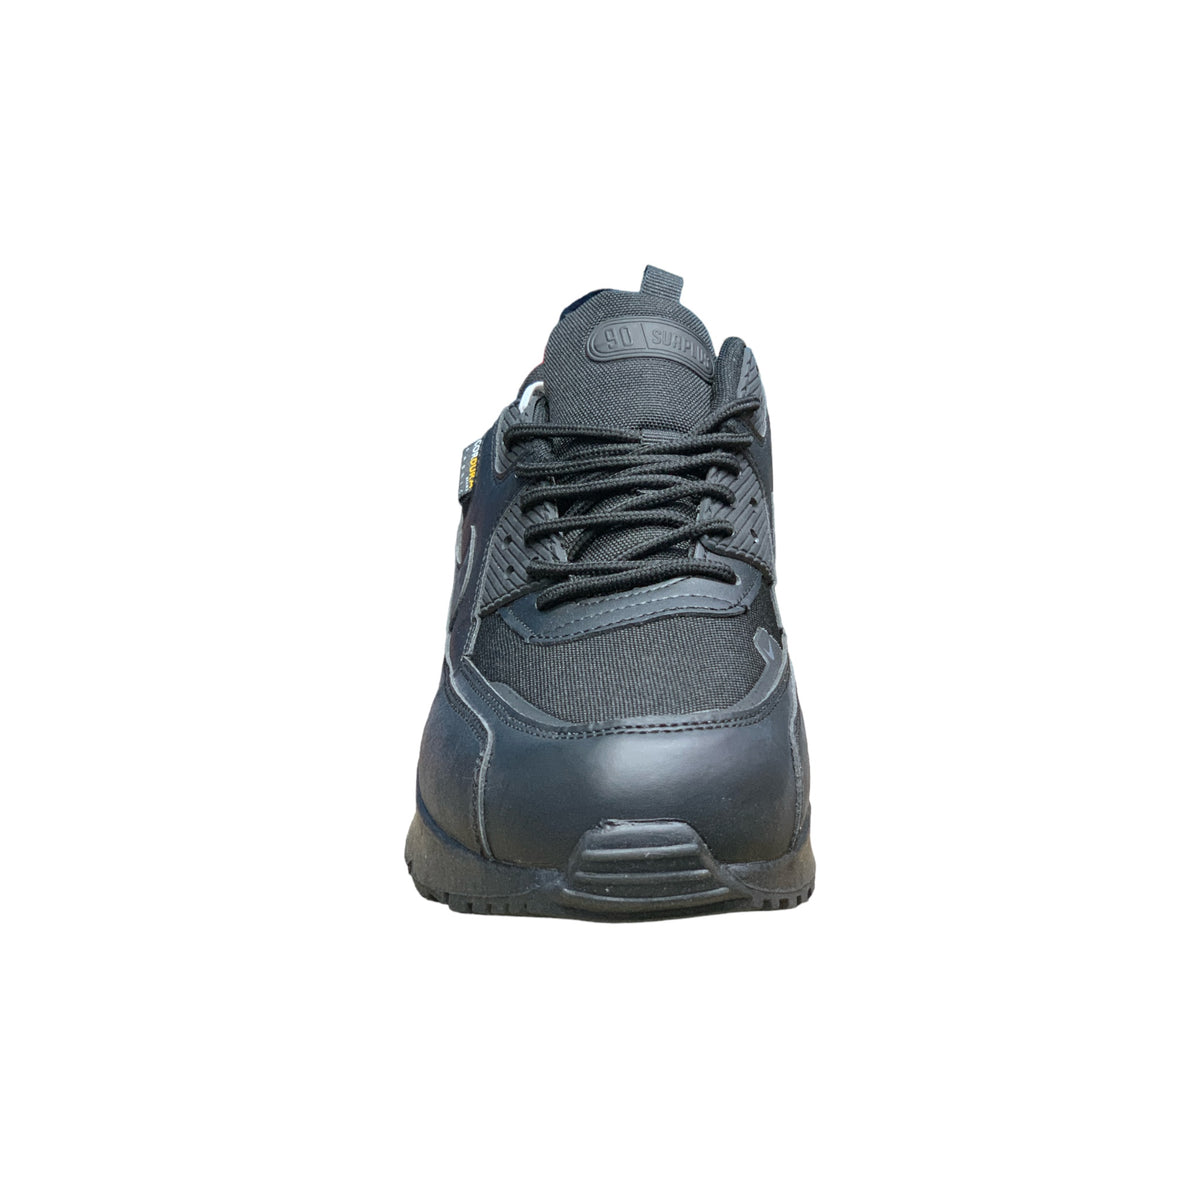 Nike Airmax 90 Premium All Black